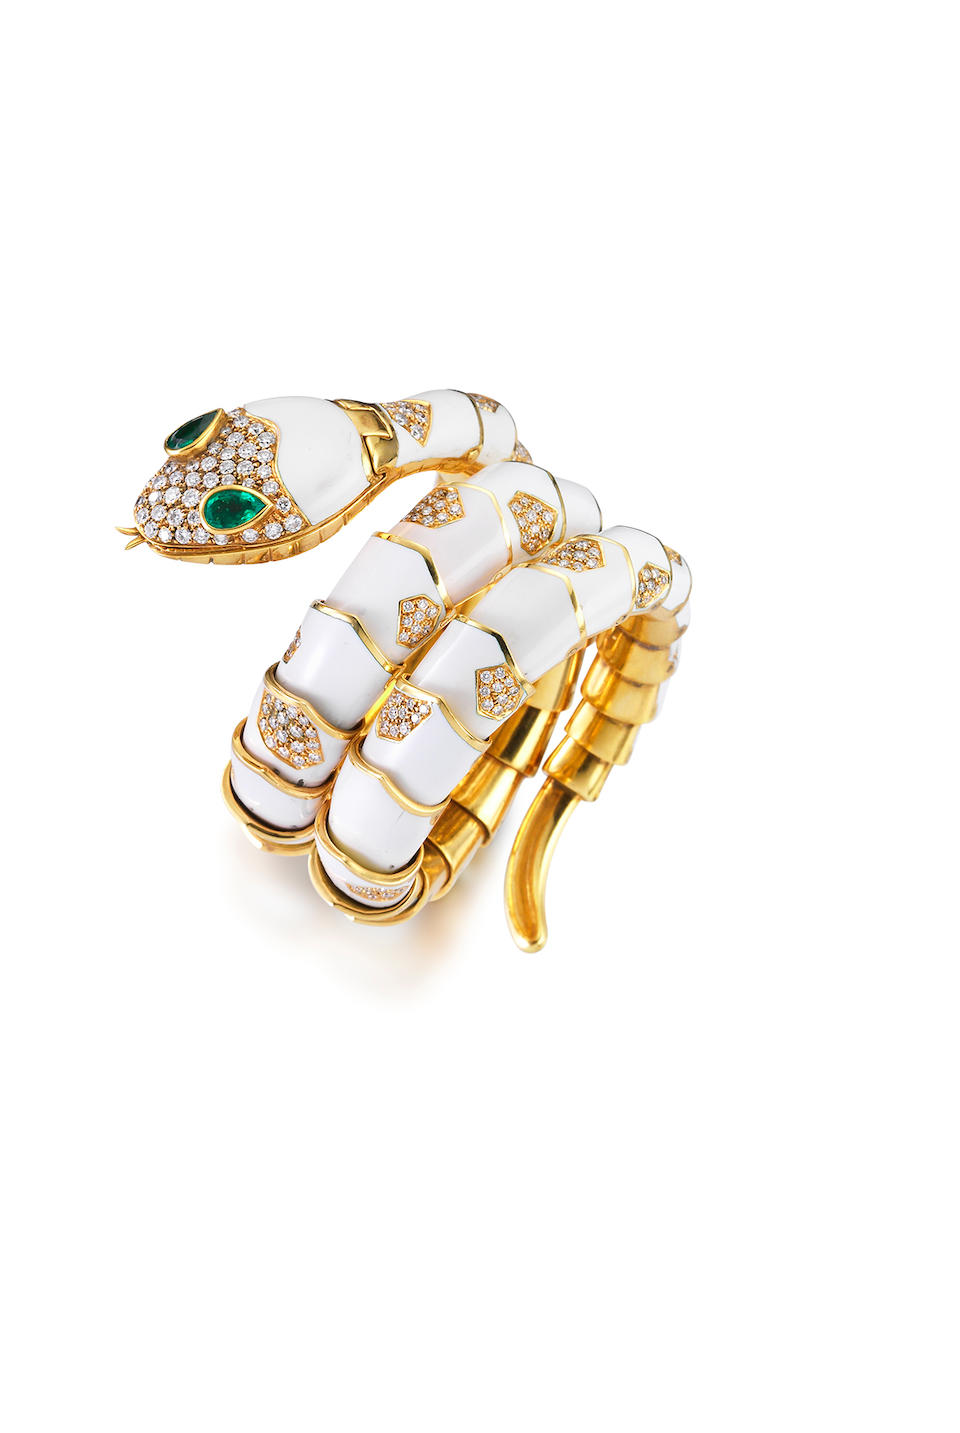 A rare enamel, emerald and diamond 'serpenti' bracelet watch, by Bulgari,